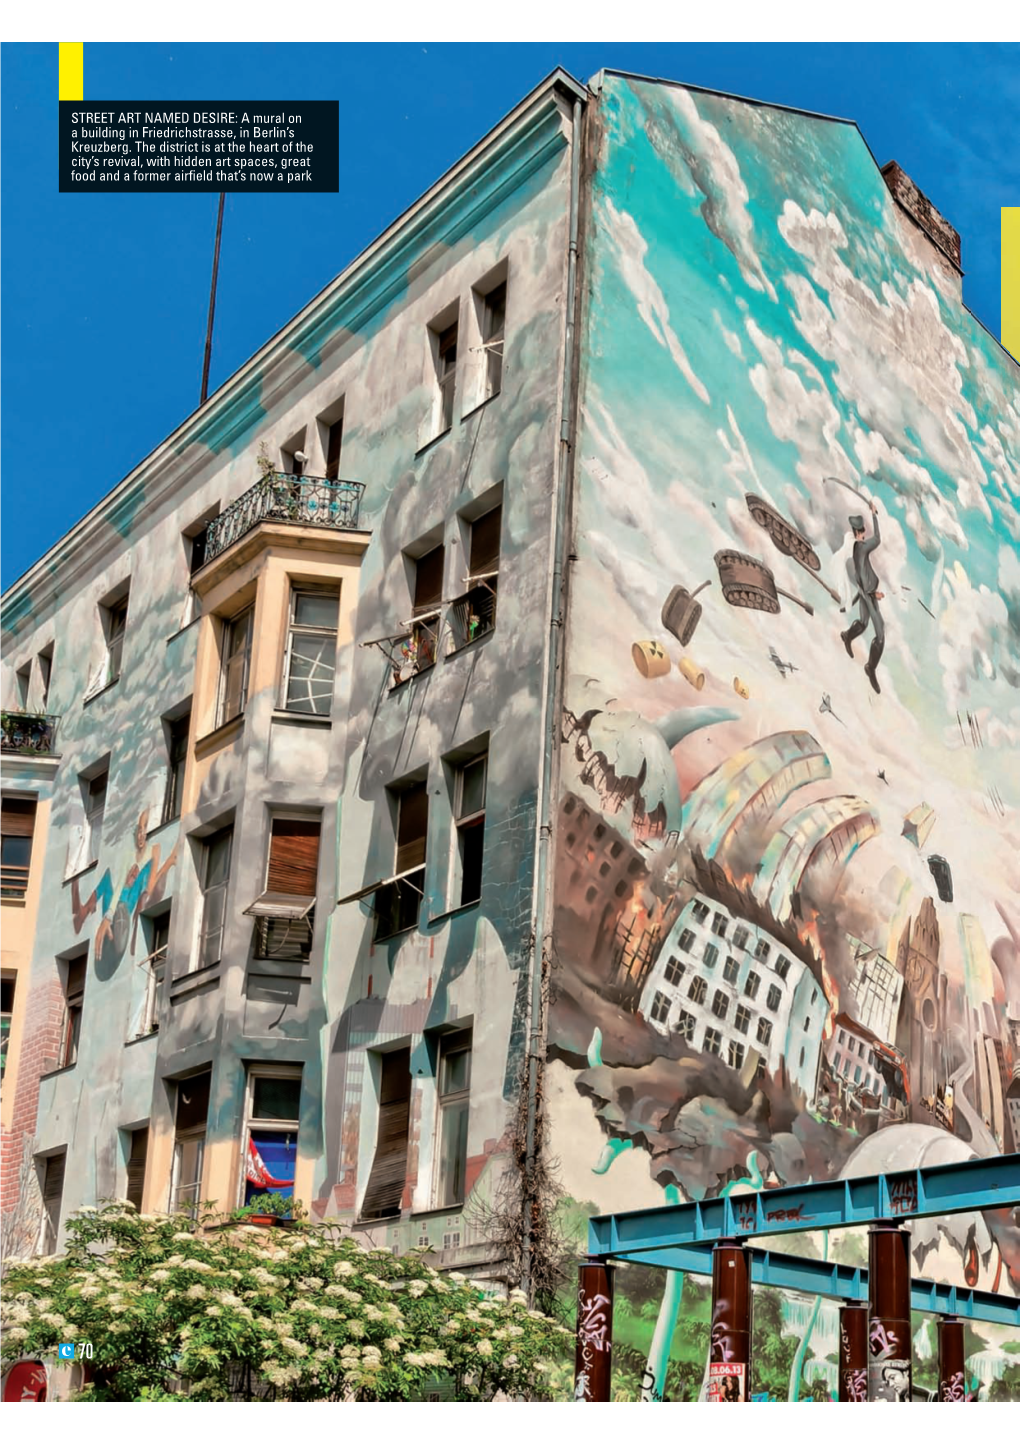 STREET ART NAMED DESIRE: a Mural on a Building in Friedrichstrasse, in Berlin’S Kreuzberg